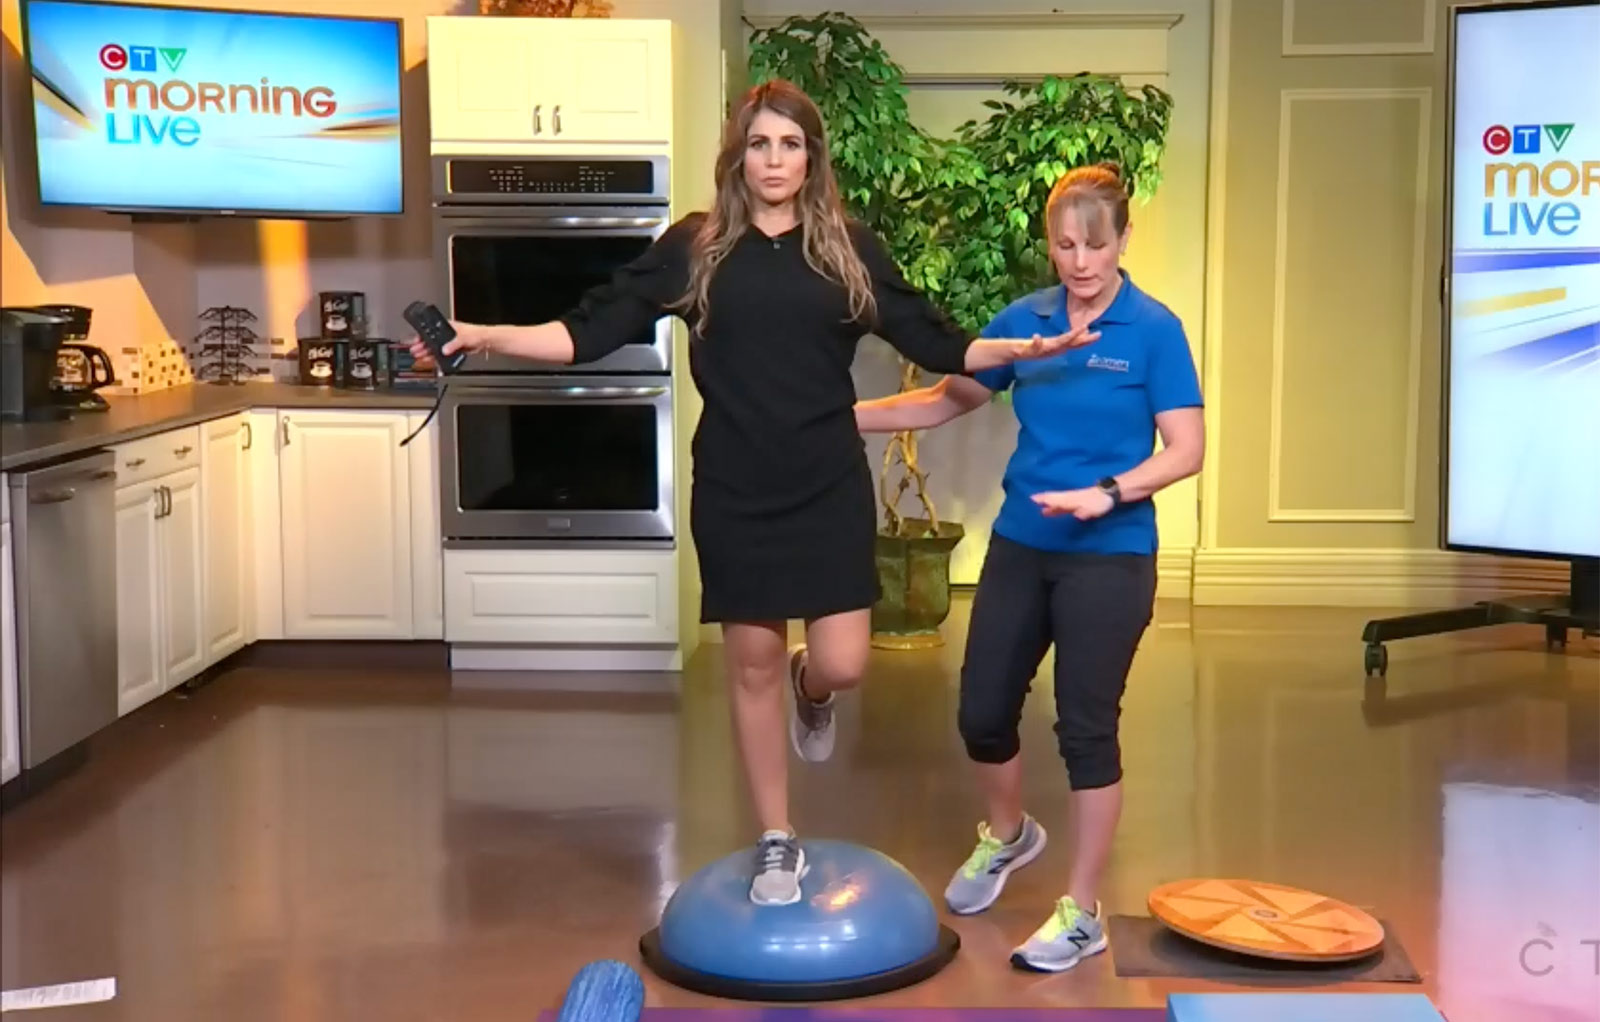 Balance Training with Laura on CTV